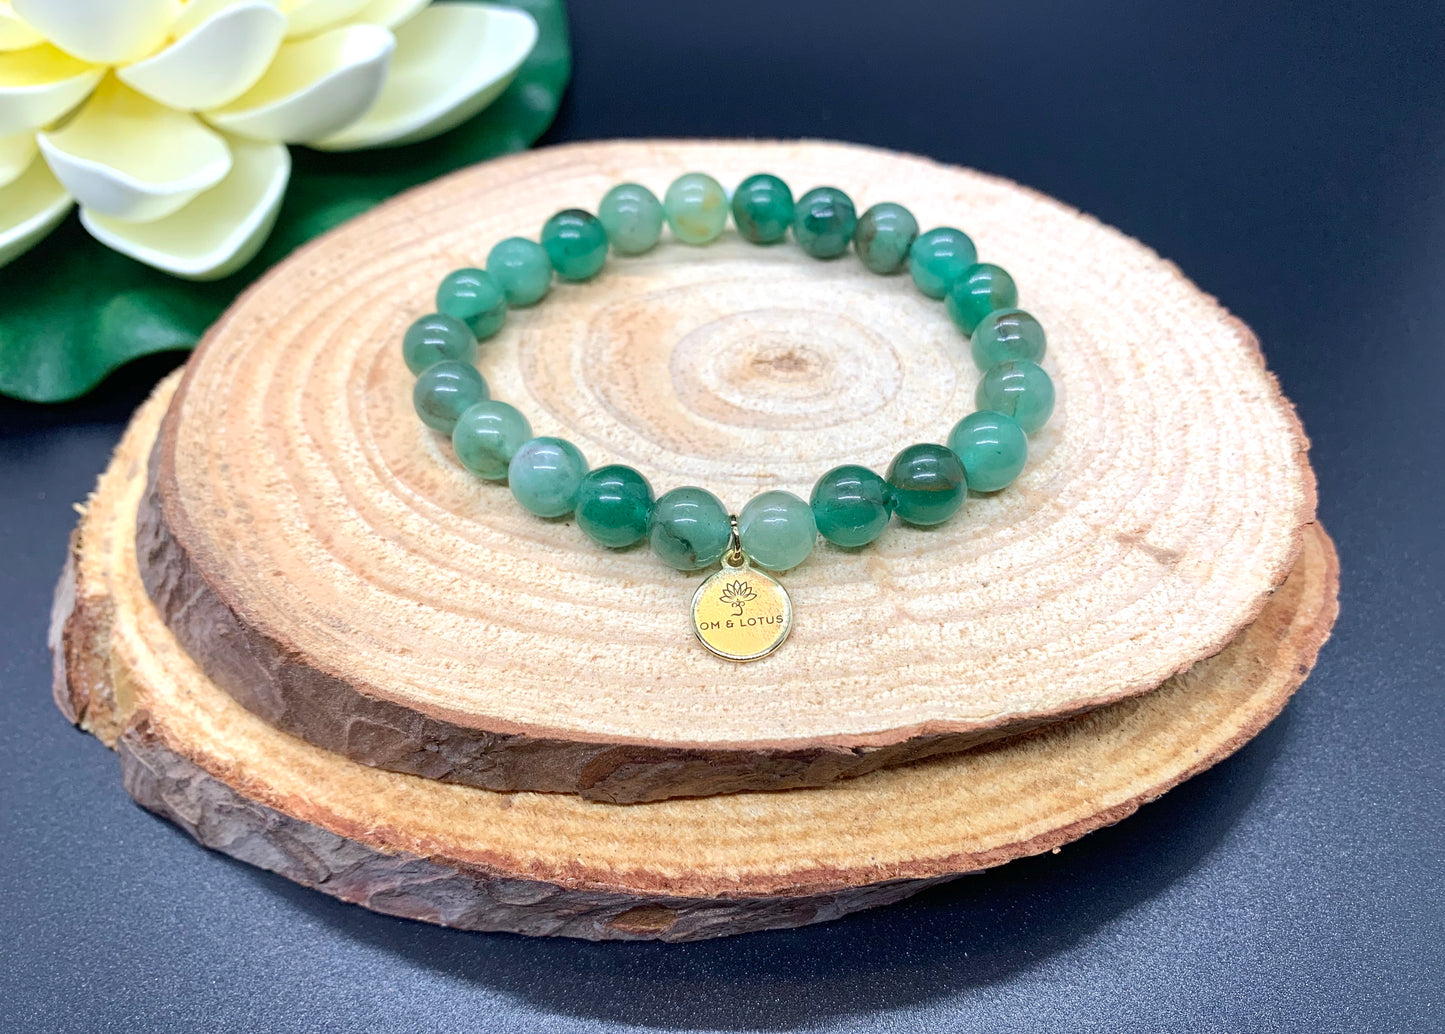 Green Aventurine Healing Crystal Bracelet